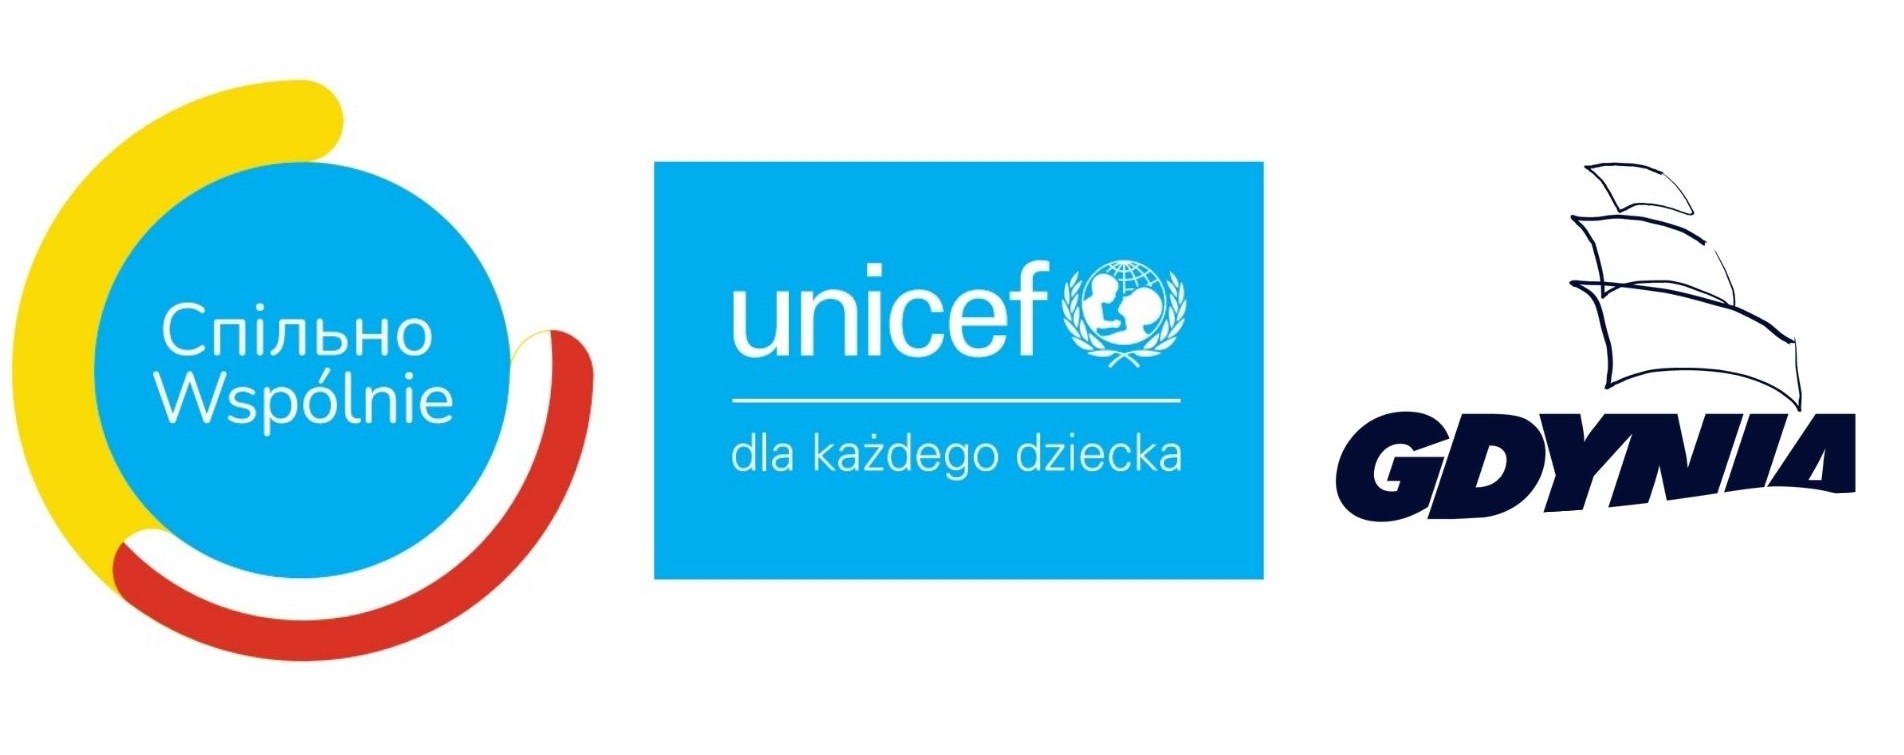 Pasek z logo Spilna, UNICEF-u i Gdyni